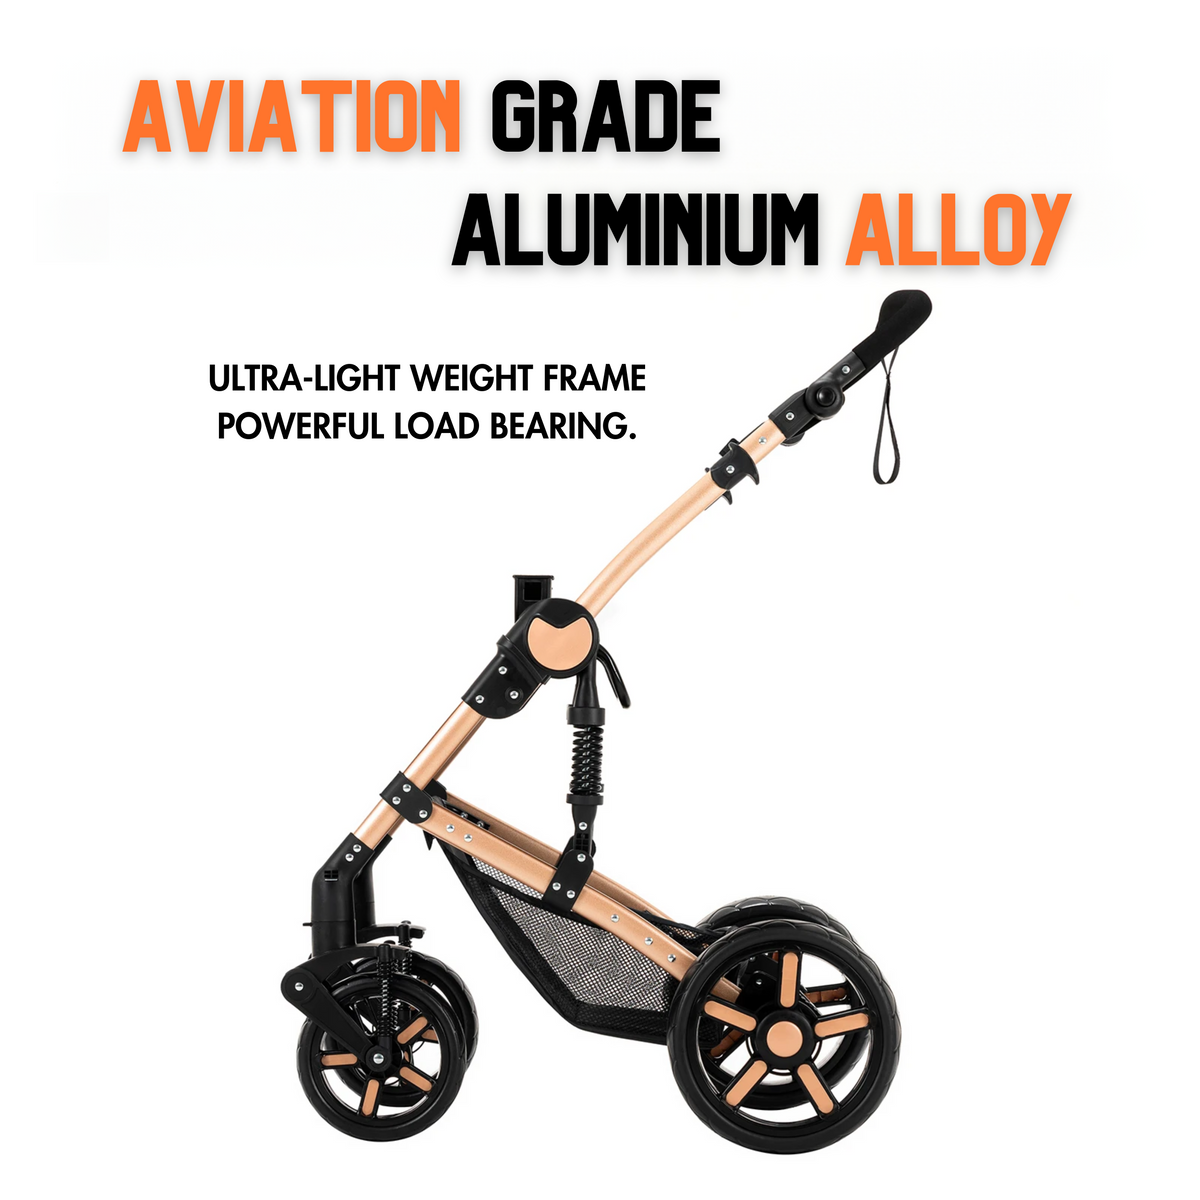 Premium 3-in-1 Baby Stroller